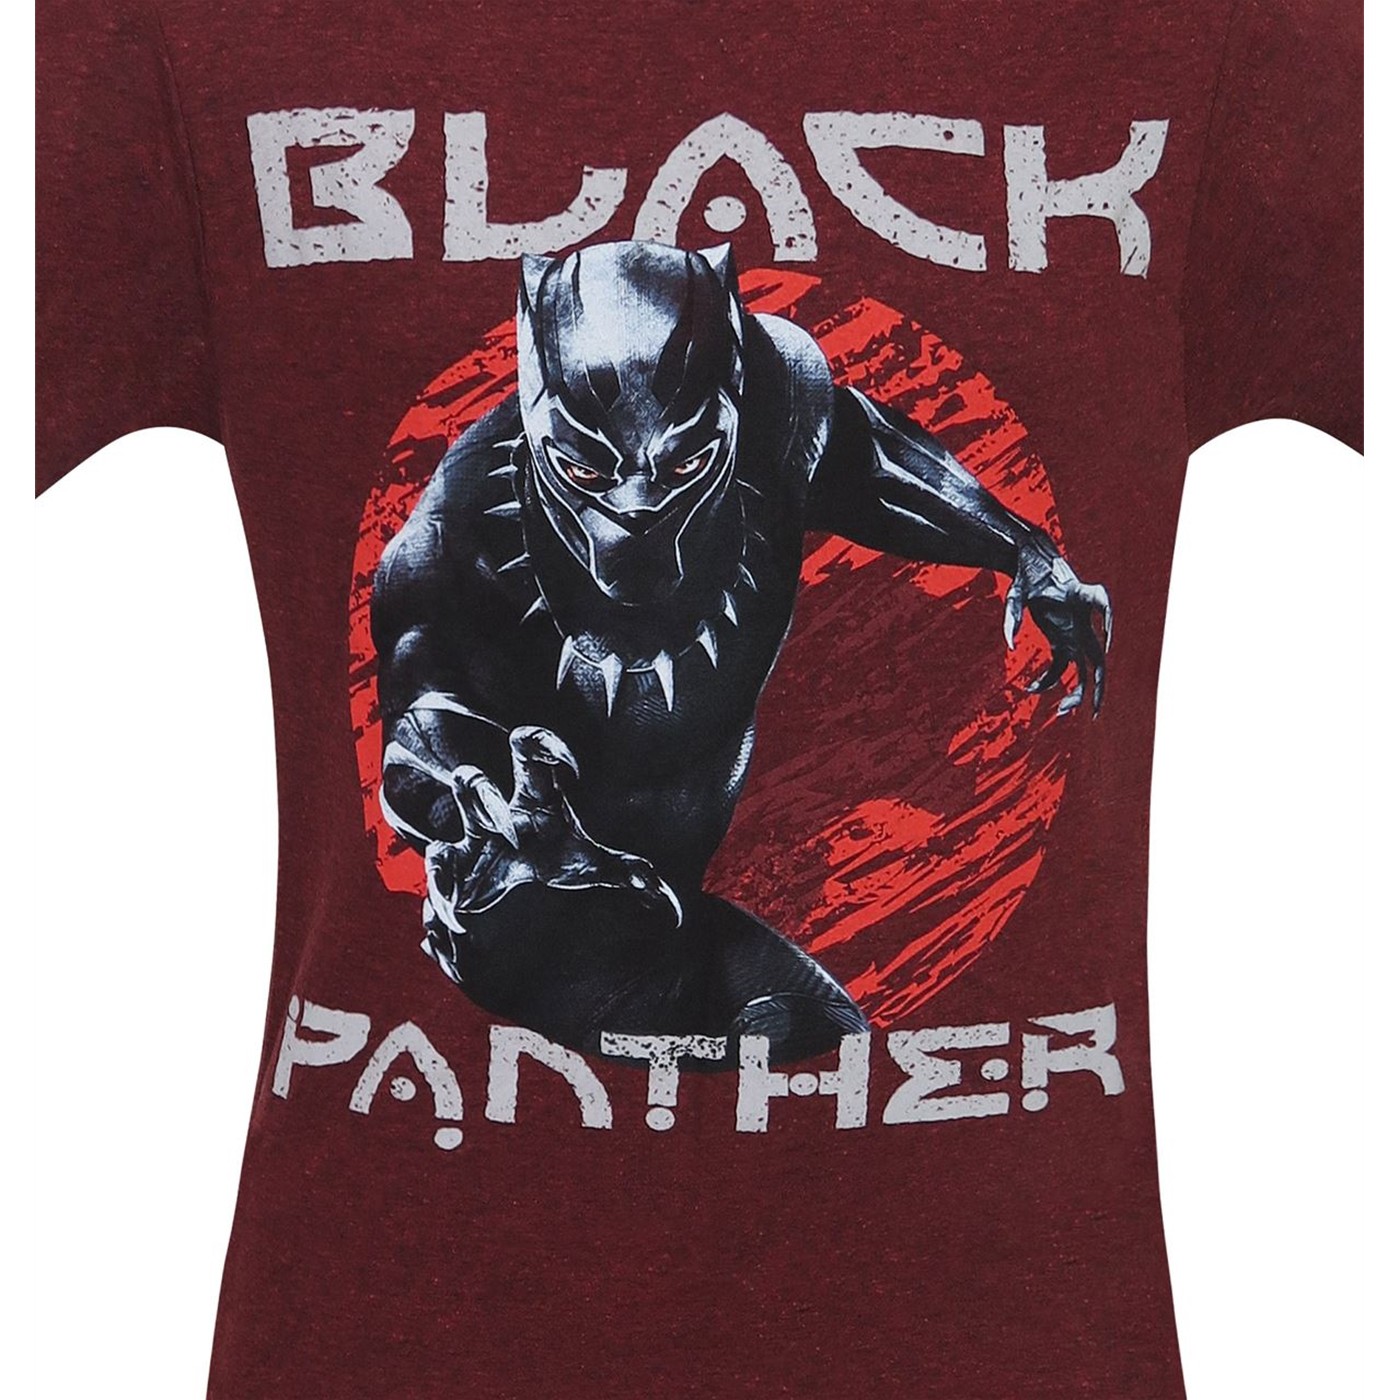 Black Panther Movie Attack Men's T-Shirt